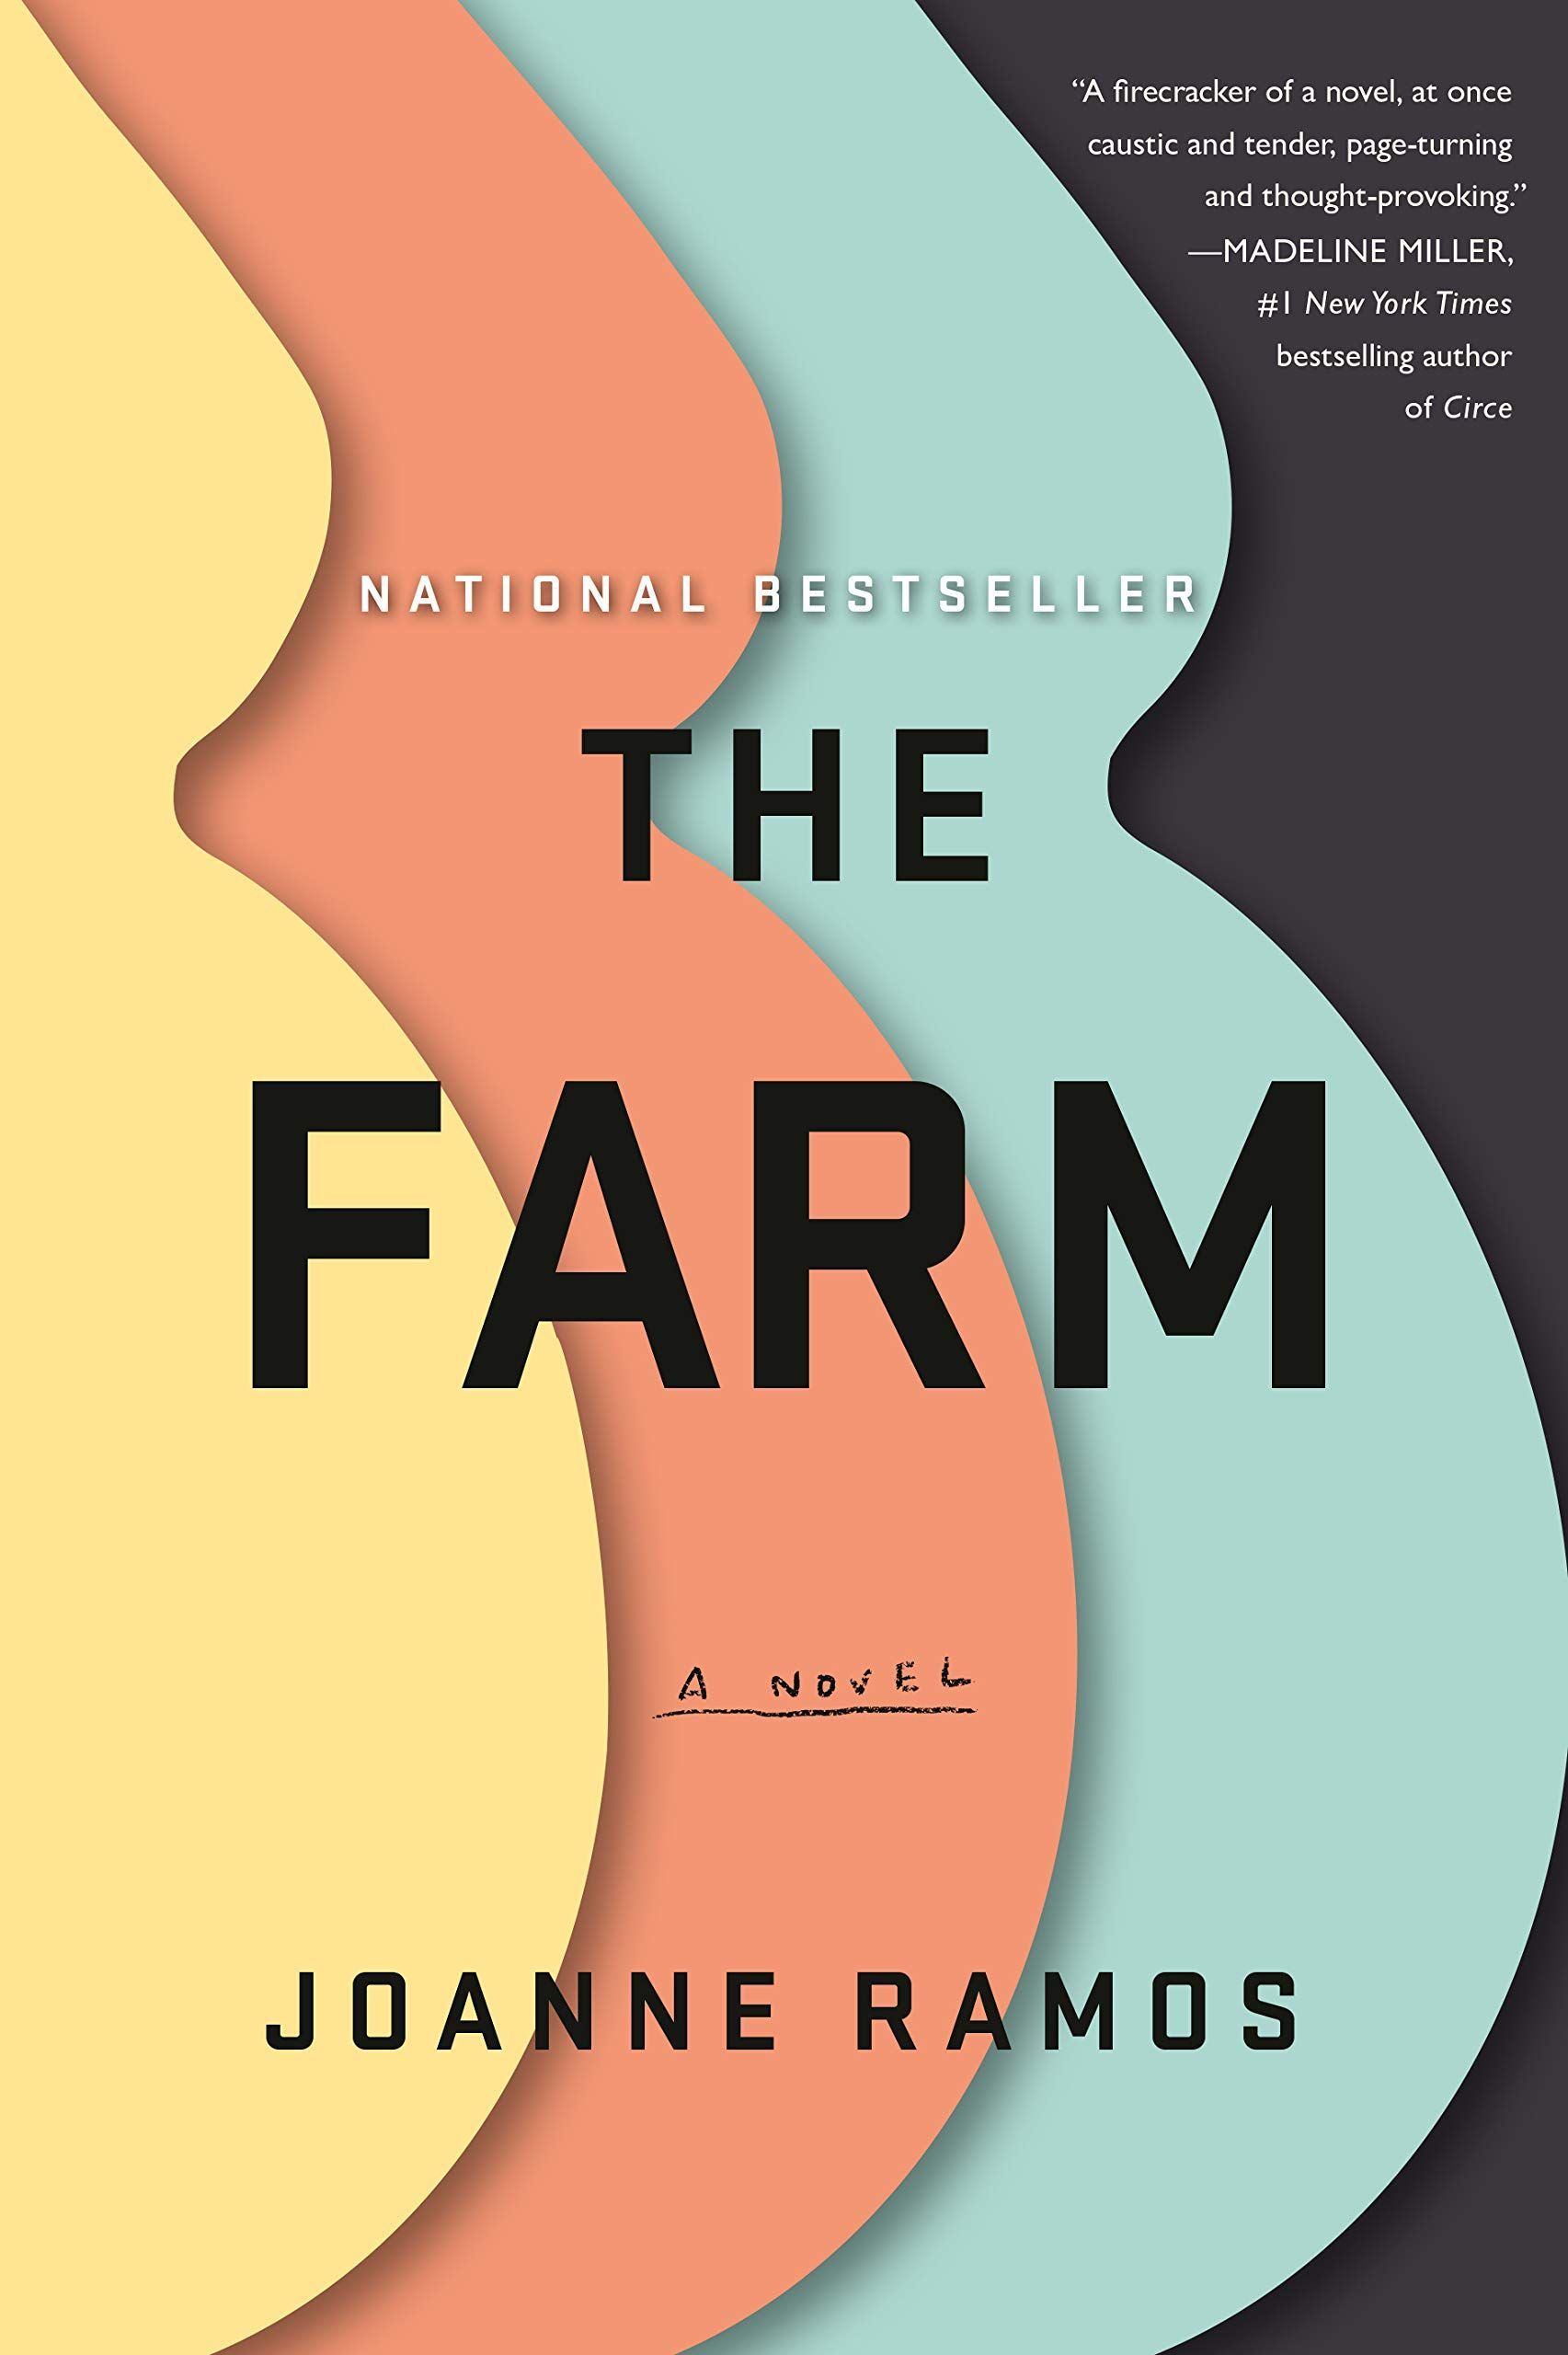 A Different Handmaid’s Tale: On Joanne Ramos’s “The Farm”